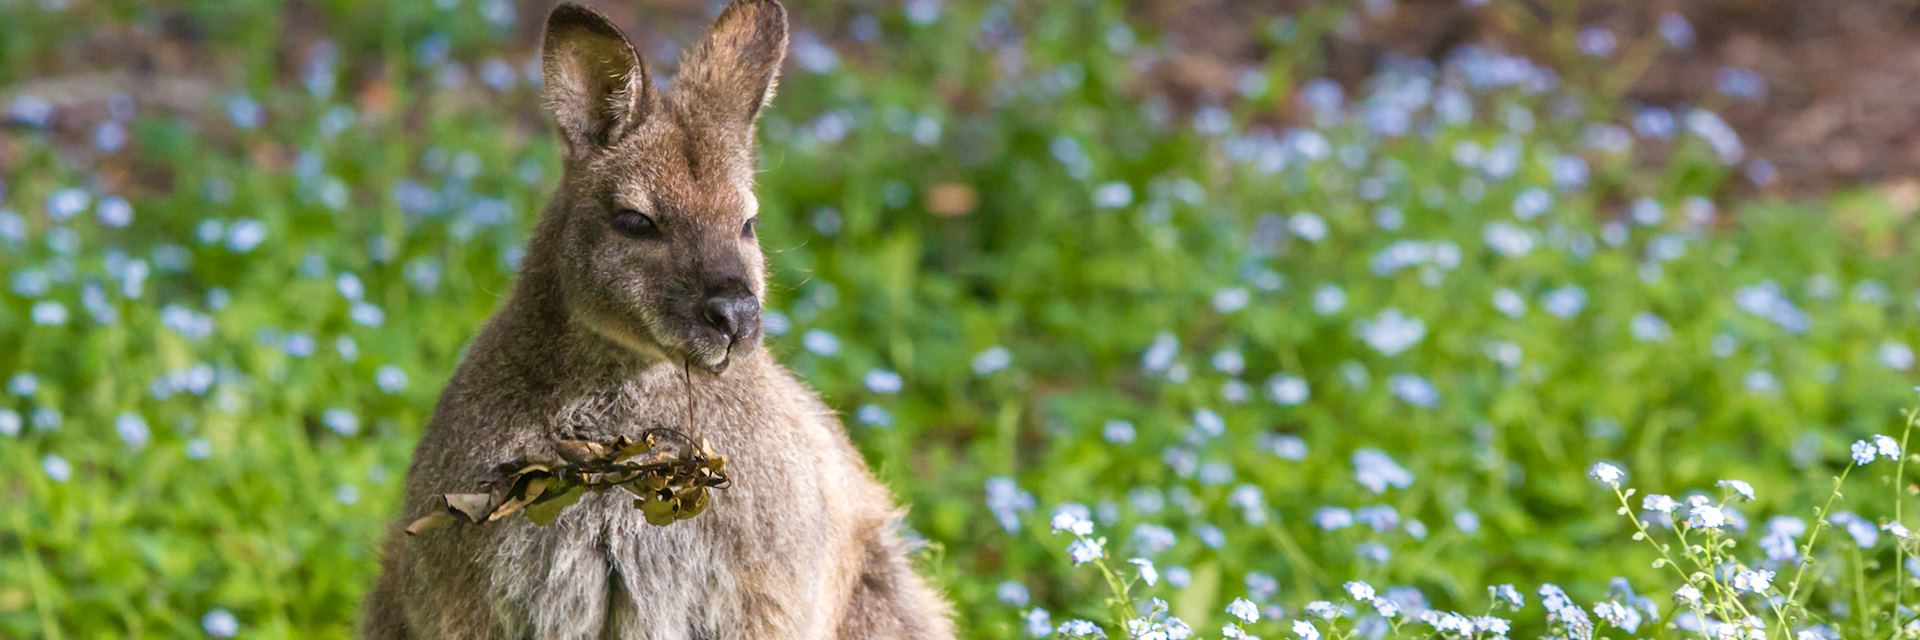 Bennett's wallaby, Bruny Island, Tasmania